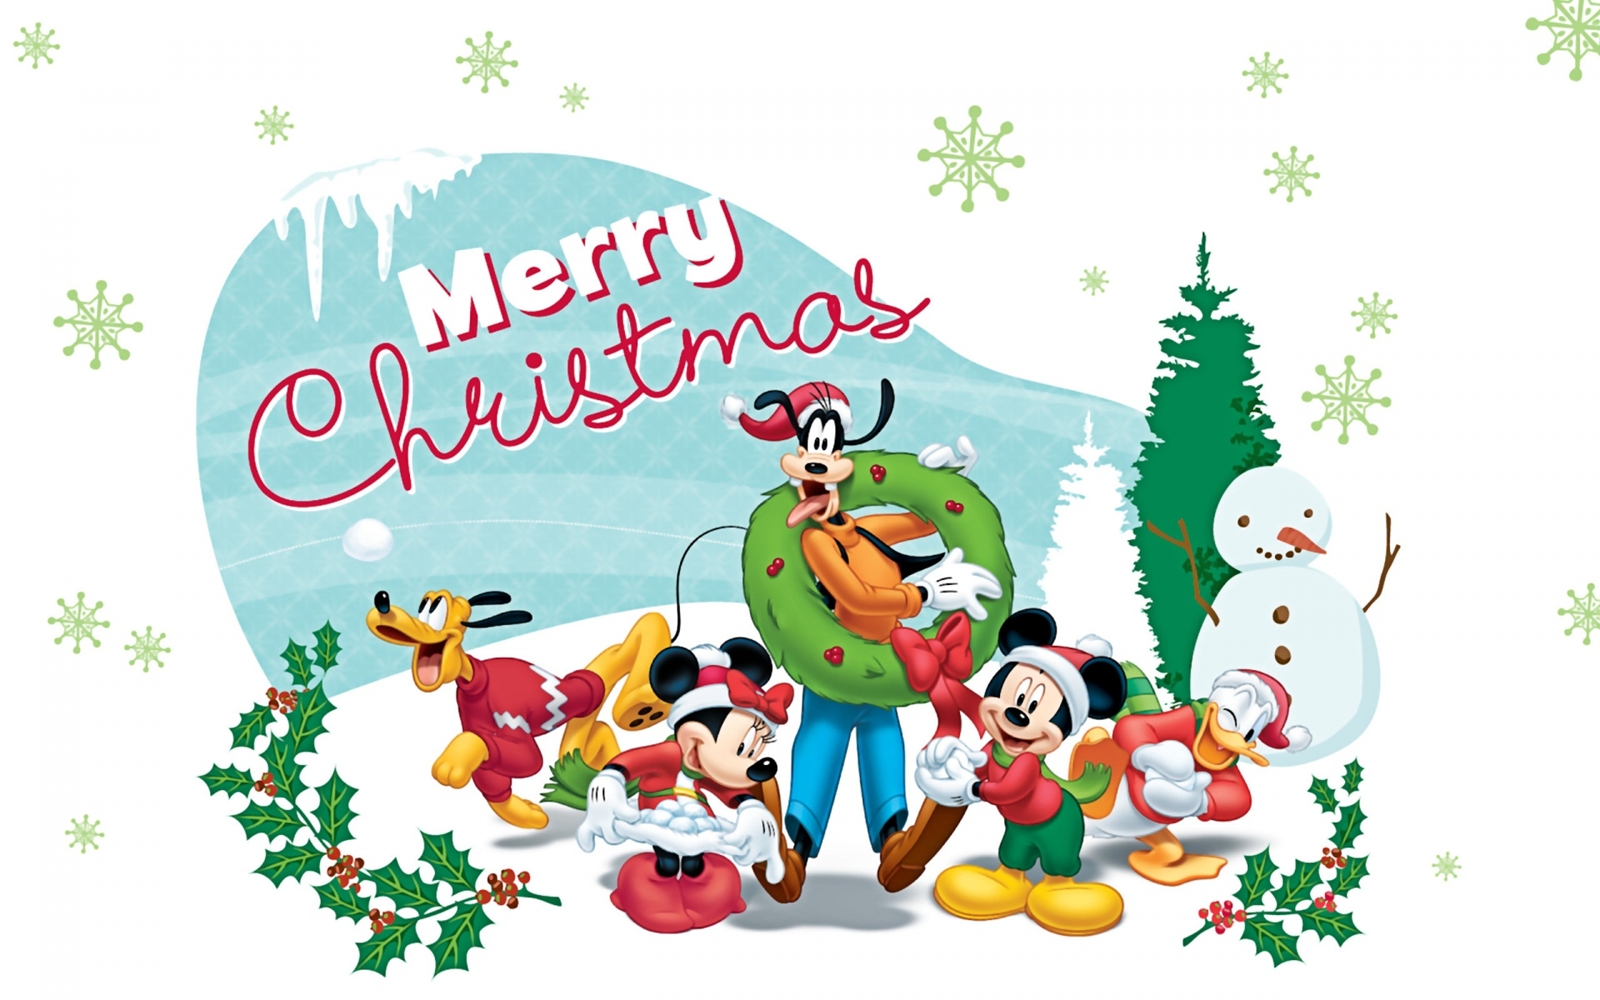 Disney-Christmas-disney-32956746-1600-1000.jpg